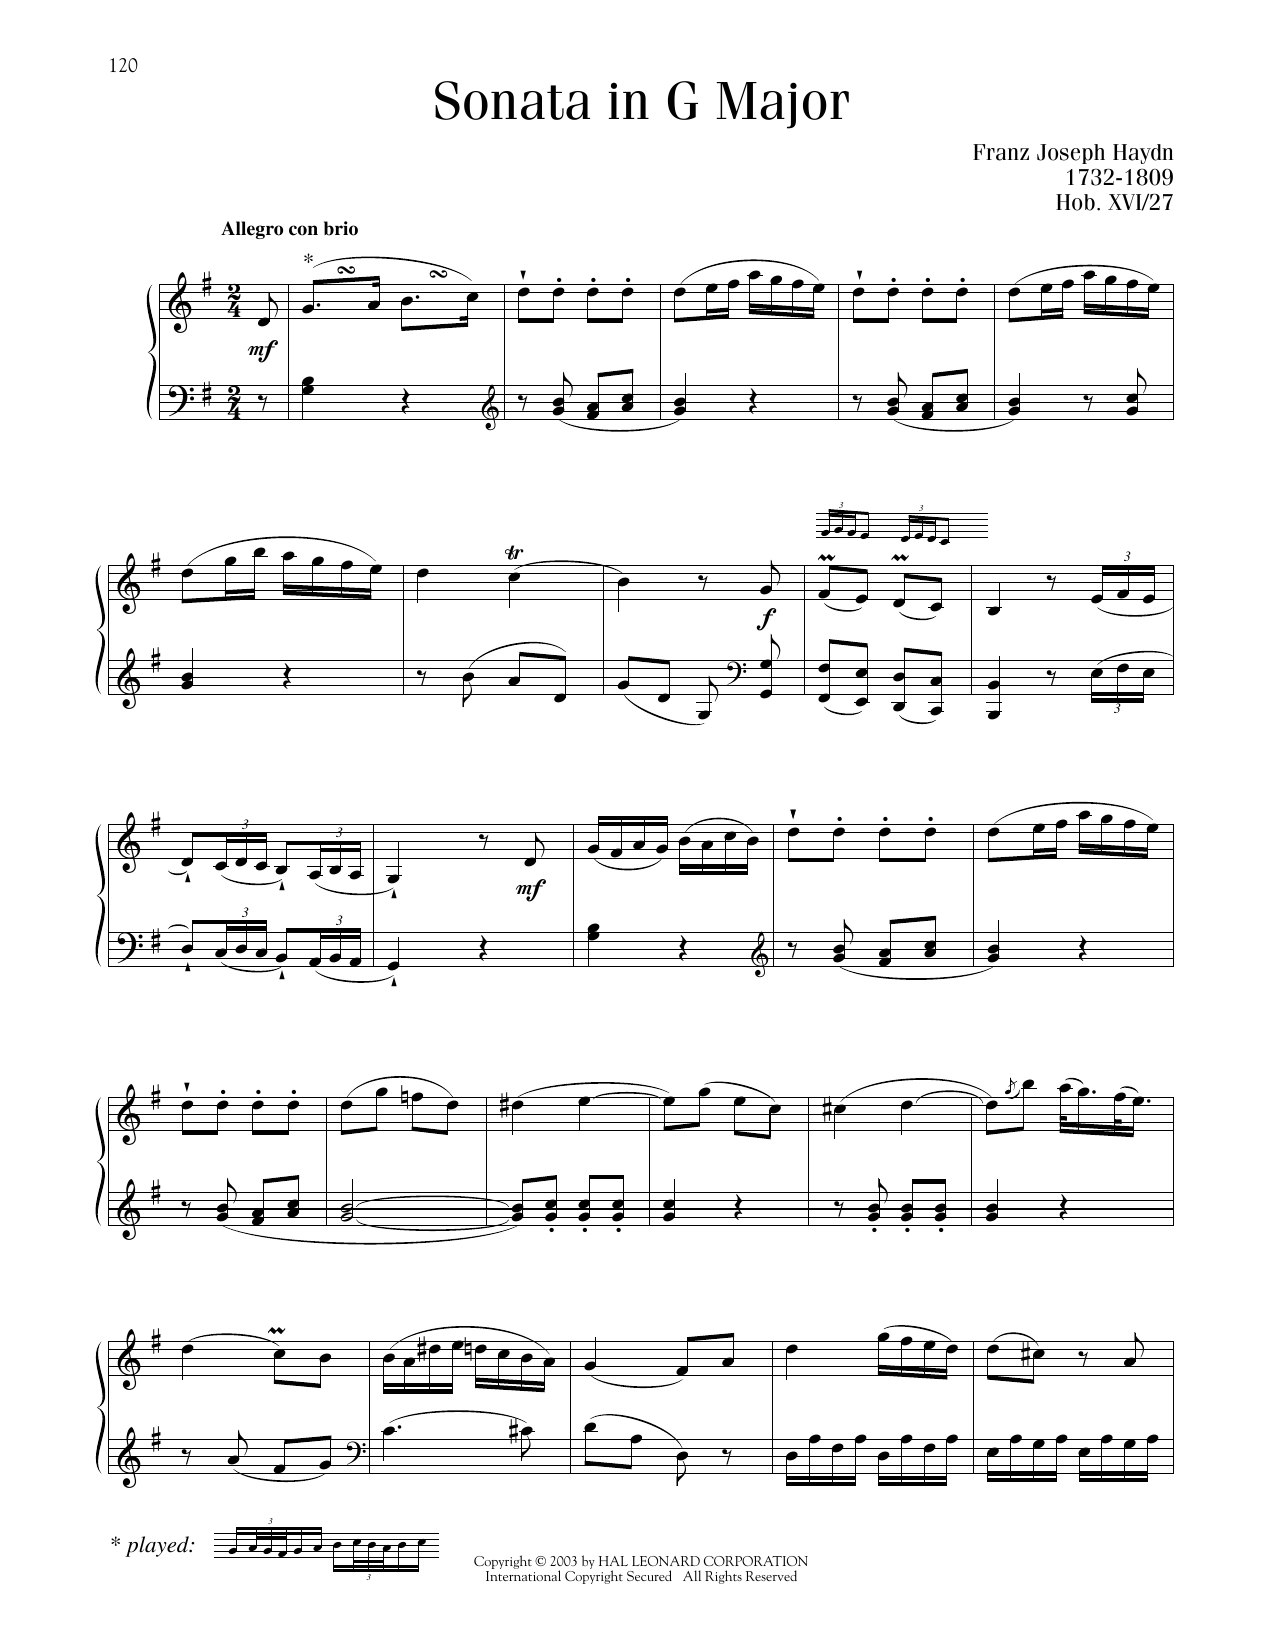 Franz Joseph Haydn Sonata In G Major, Hob. XVI: 27 sheet music notes and chords arranged for Piano Solo